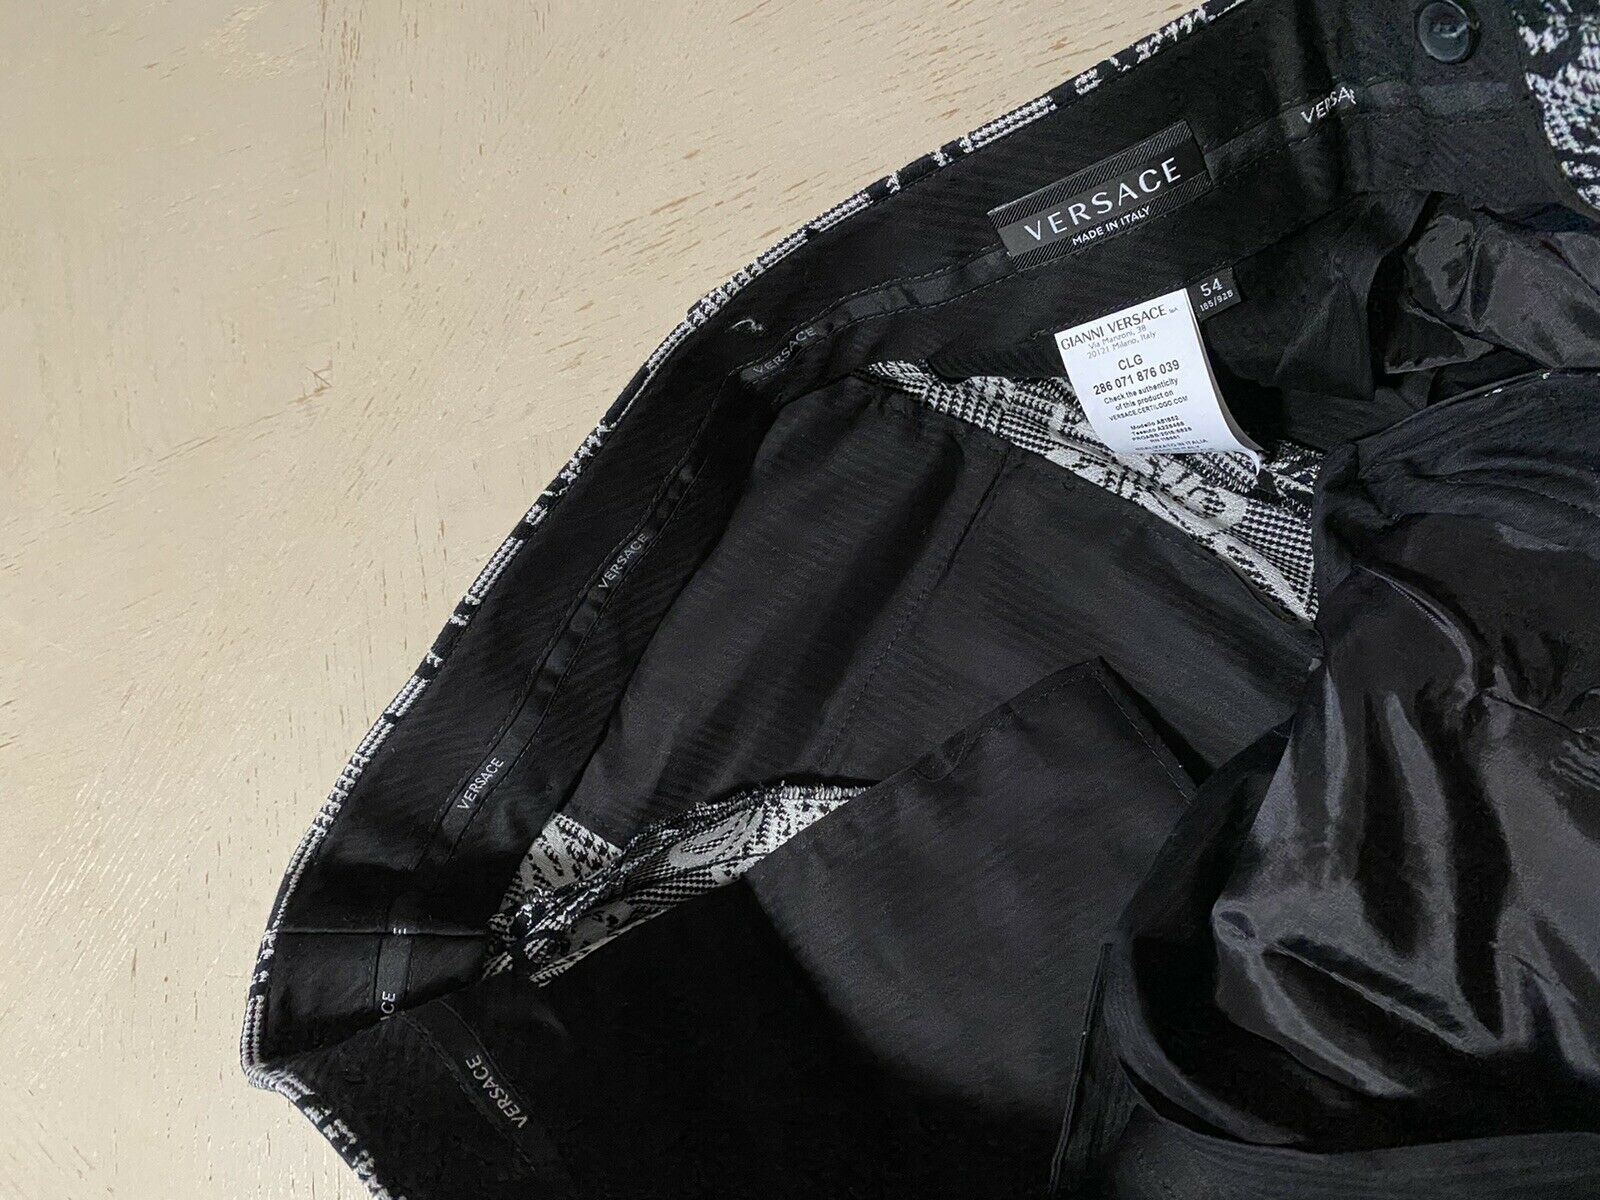 New $3795 Versace Mens Suit Black/White 44R US ( 54R Eu ) Italy